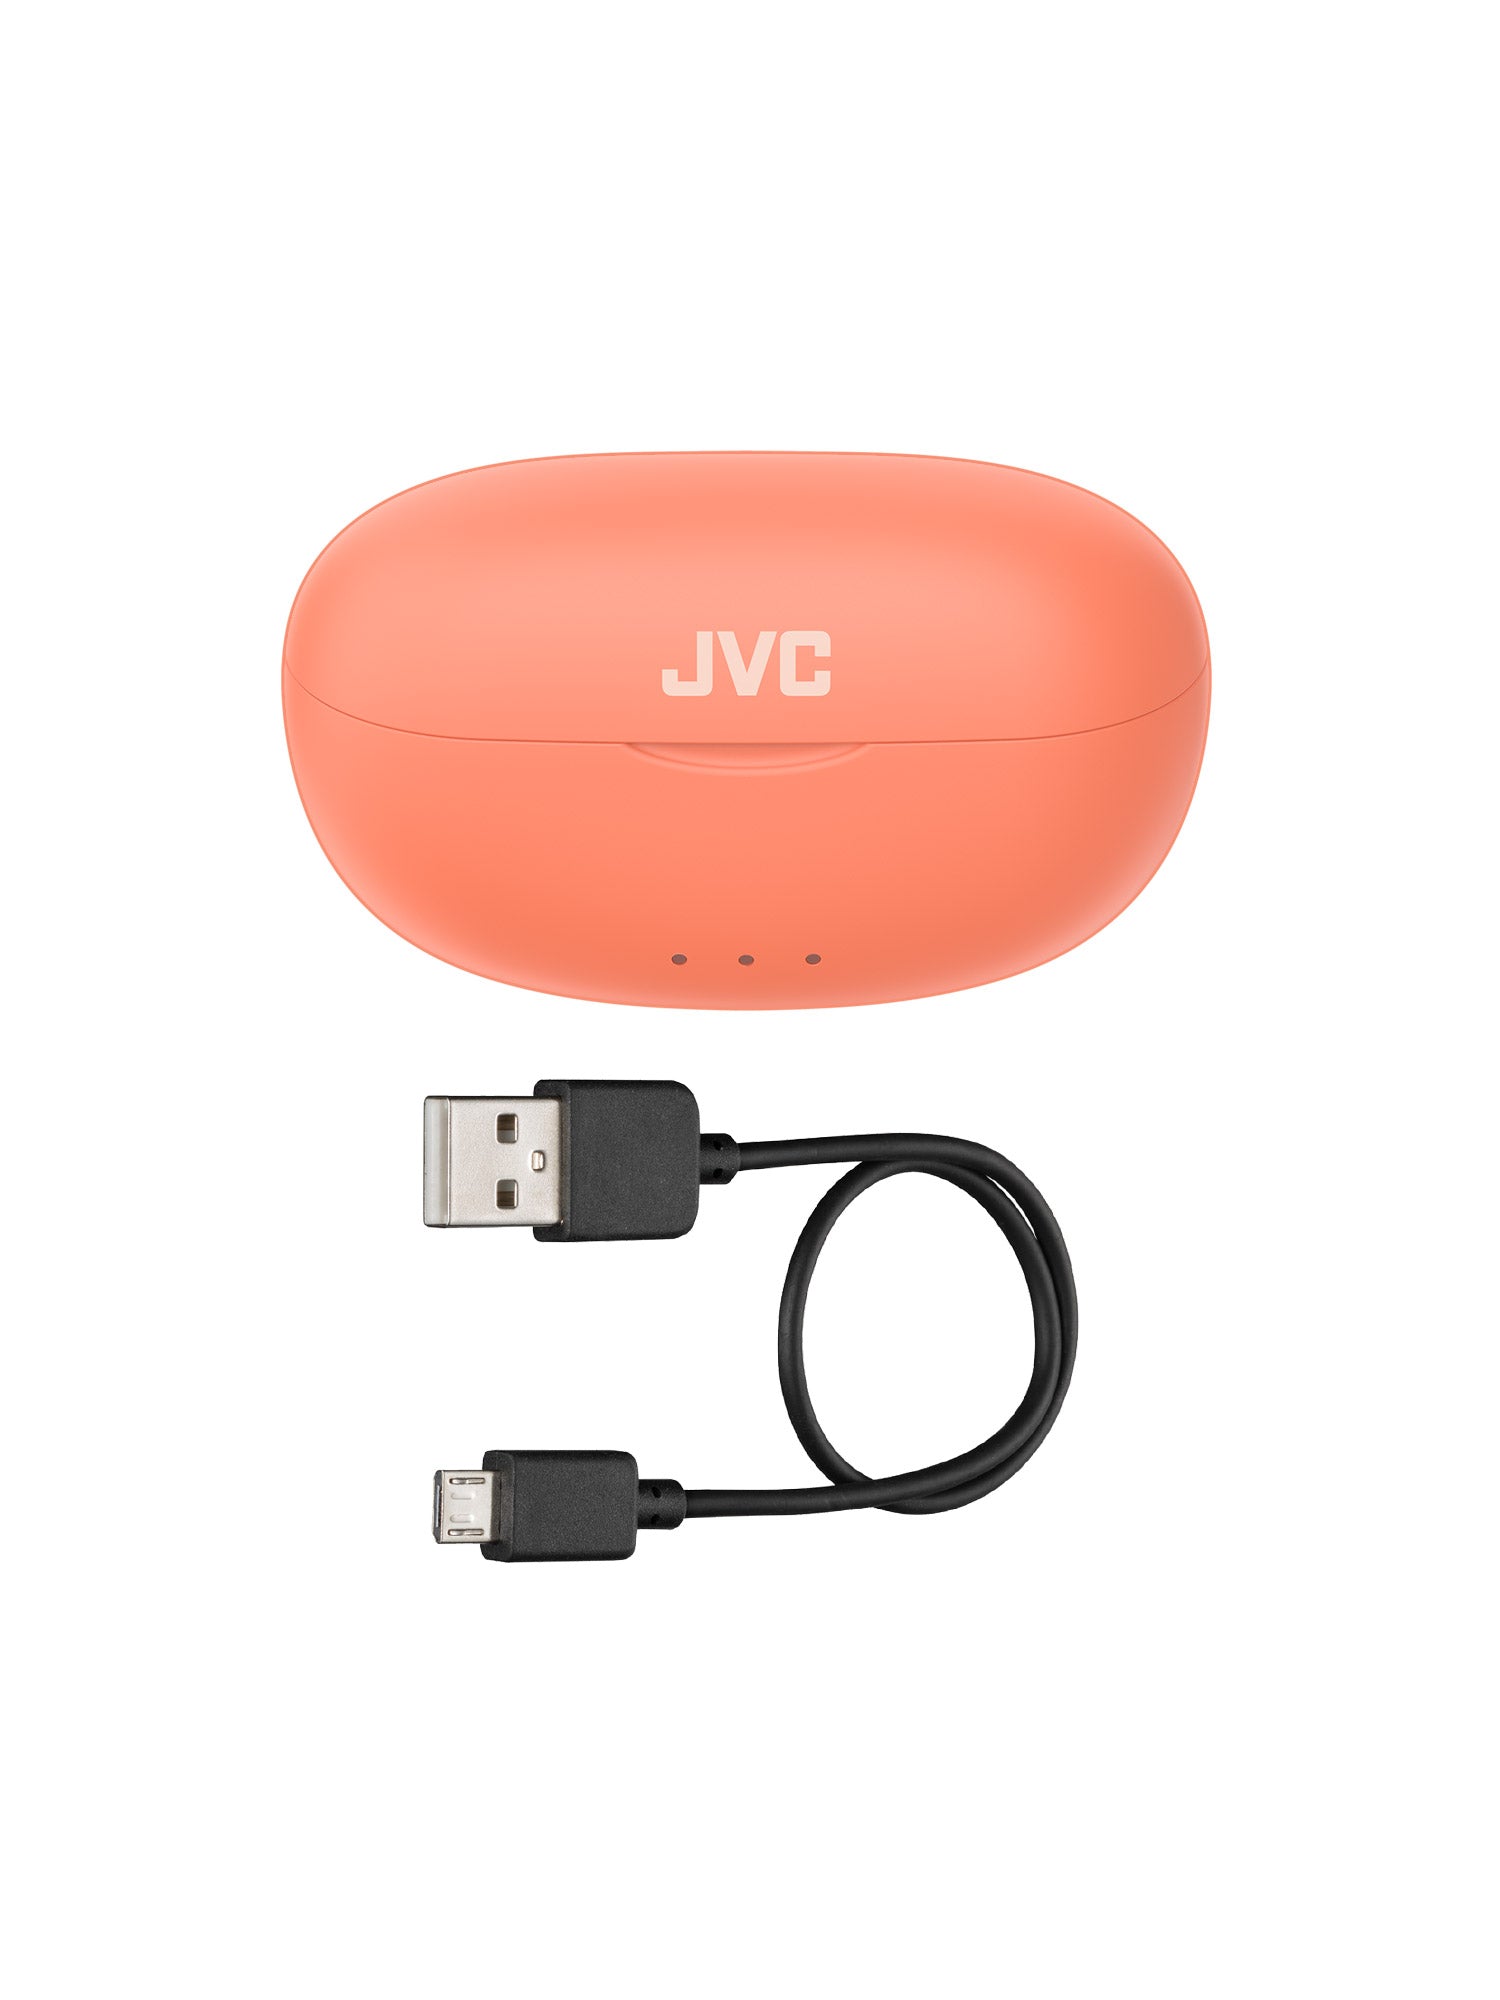 HA-A7T2 in peach wireless earbuds accessoriese by JVC